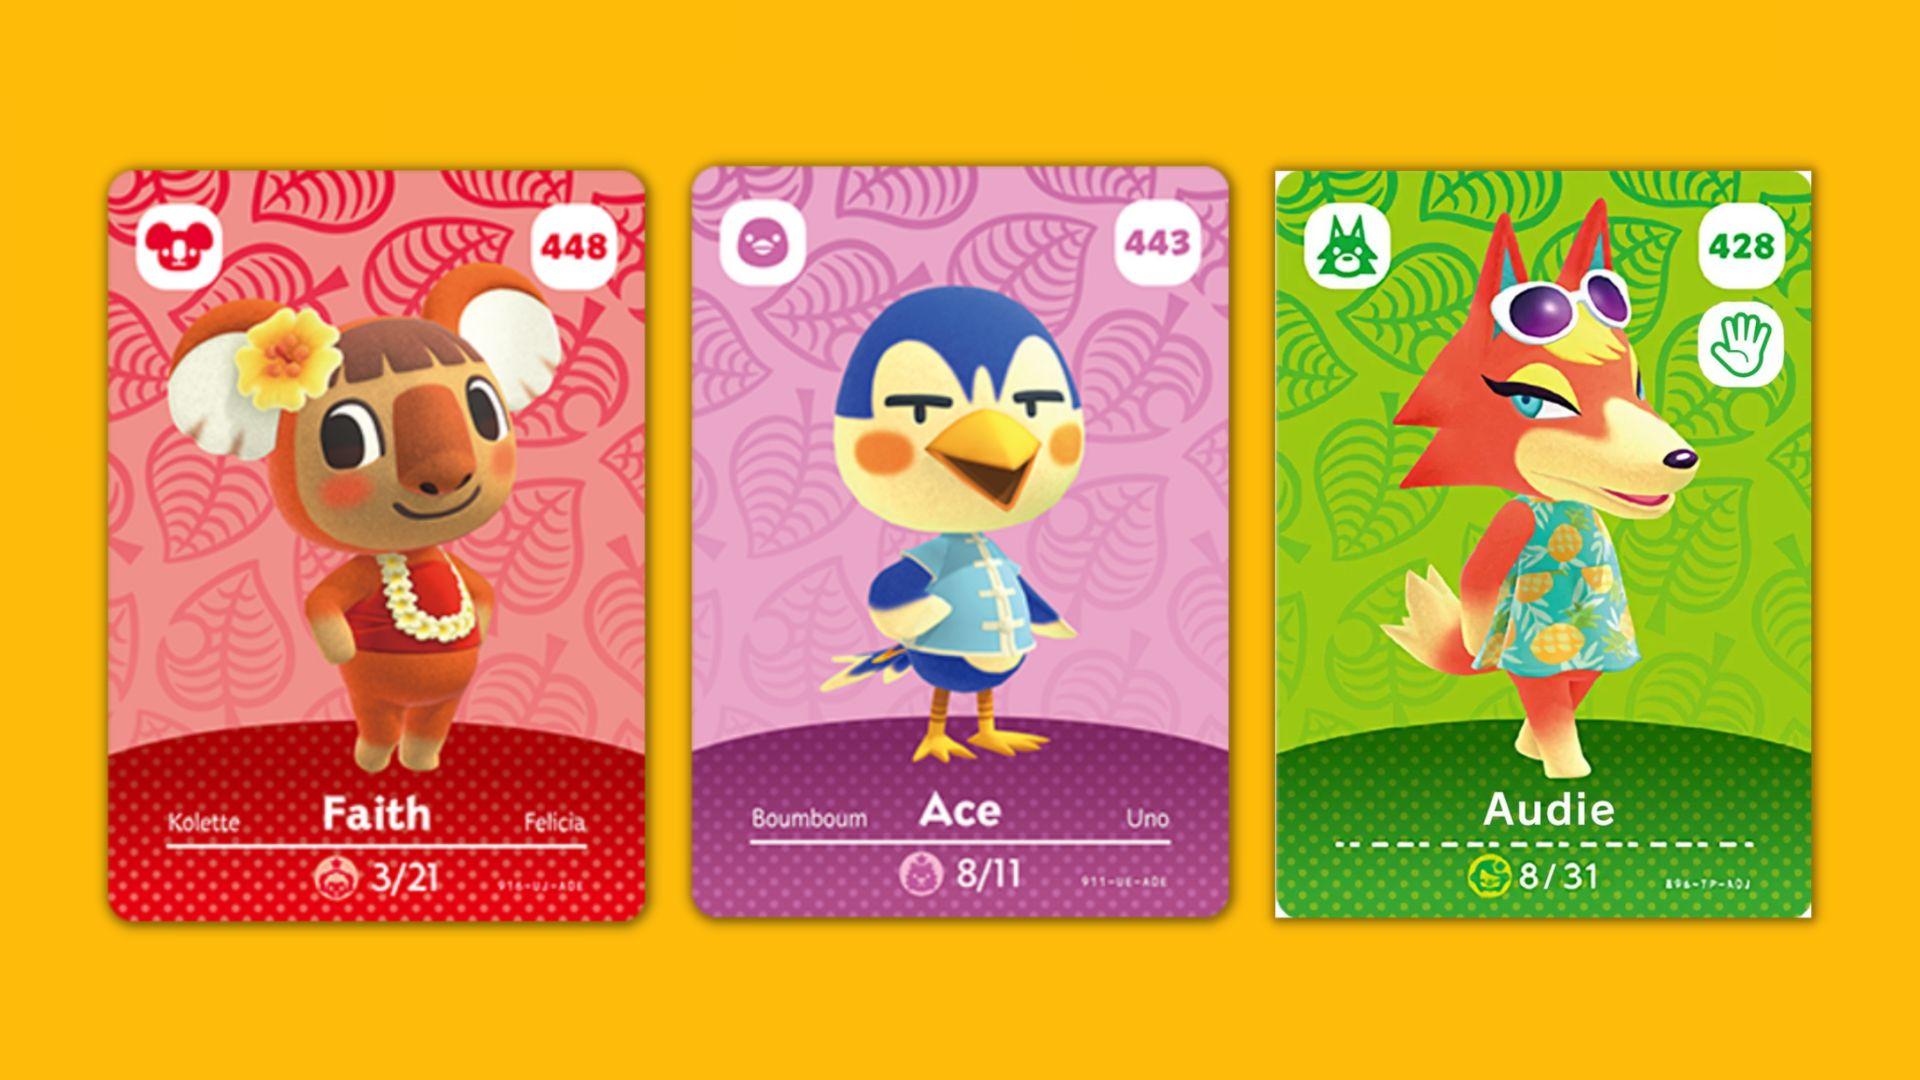 Amiibo and Amiibo Card Functionality - Animal Crossing: New Horizons Guide  - IGN